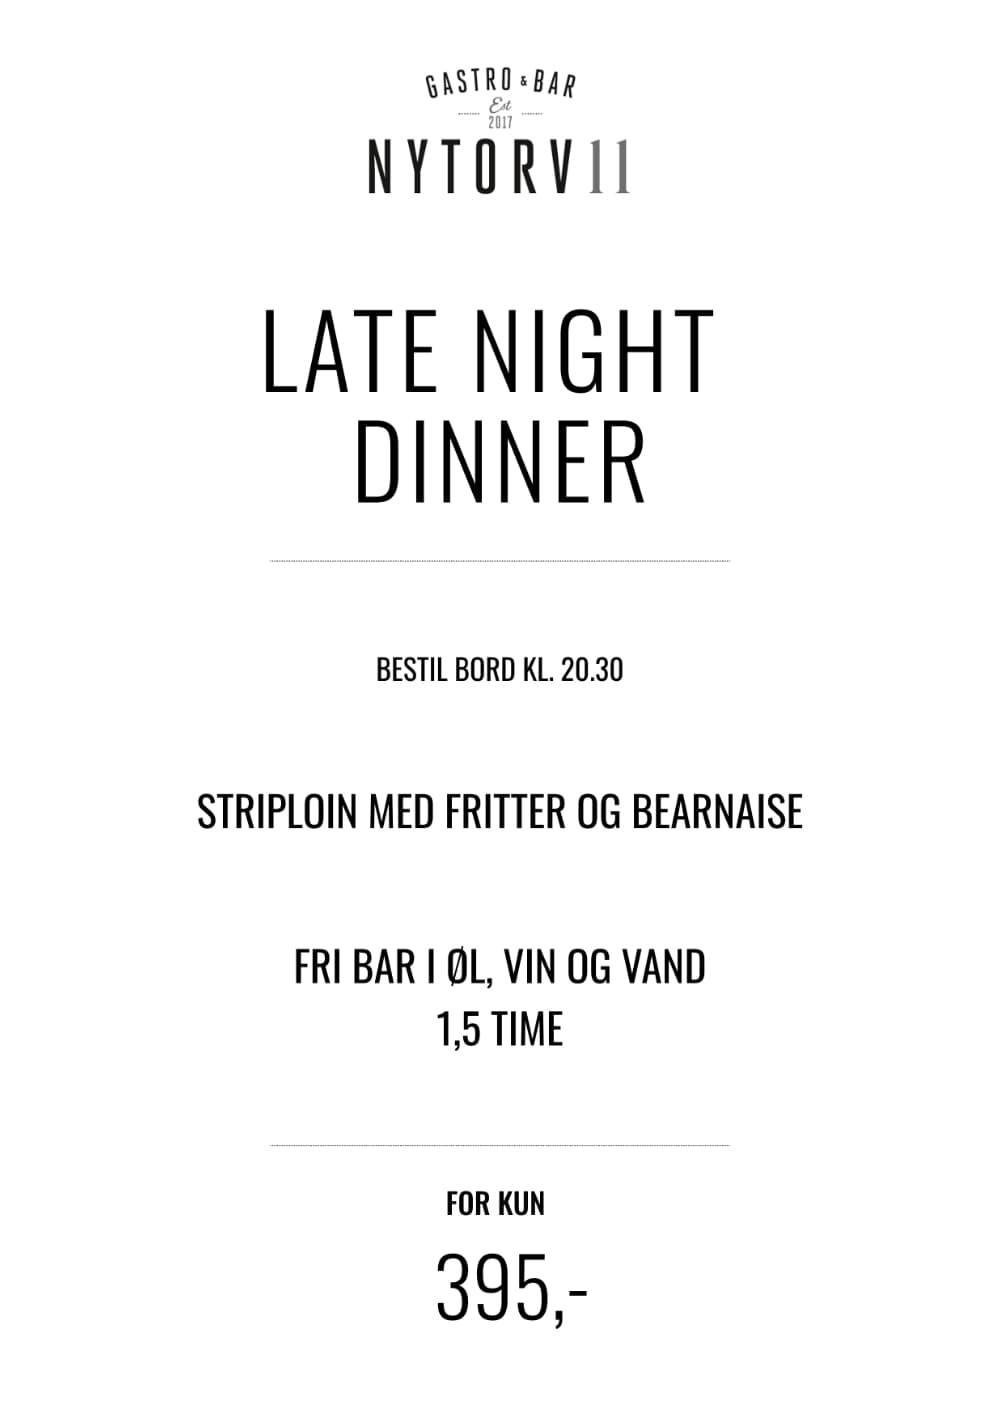 Nytorv 11 - Late night dinner